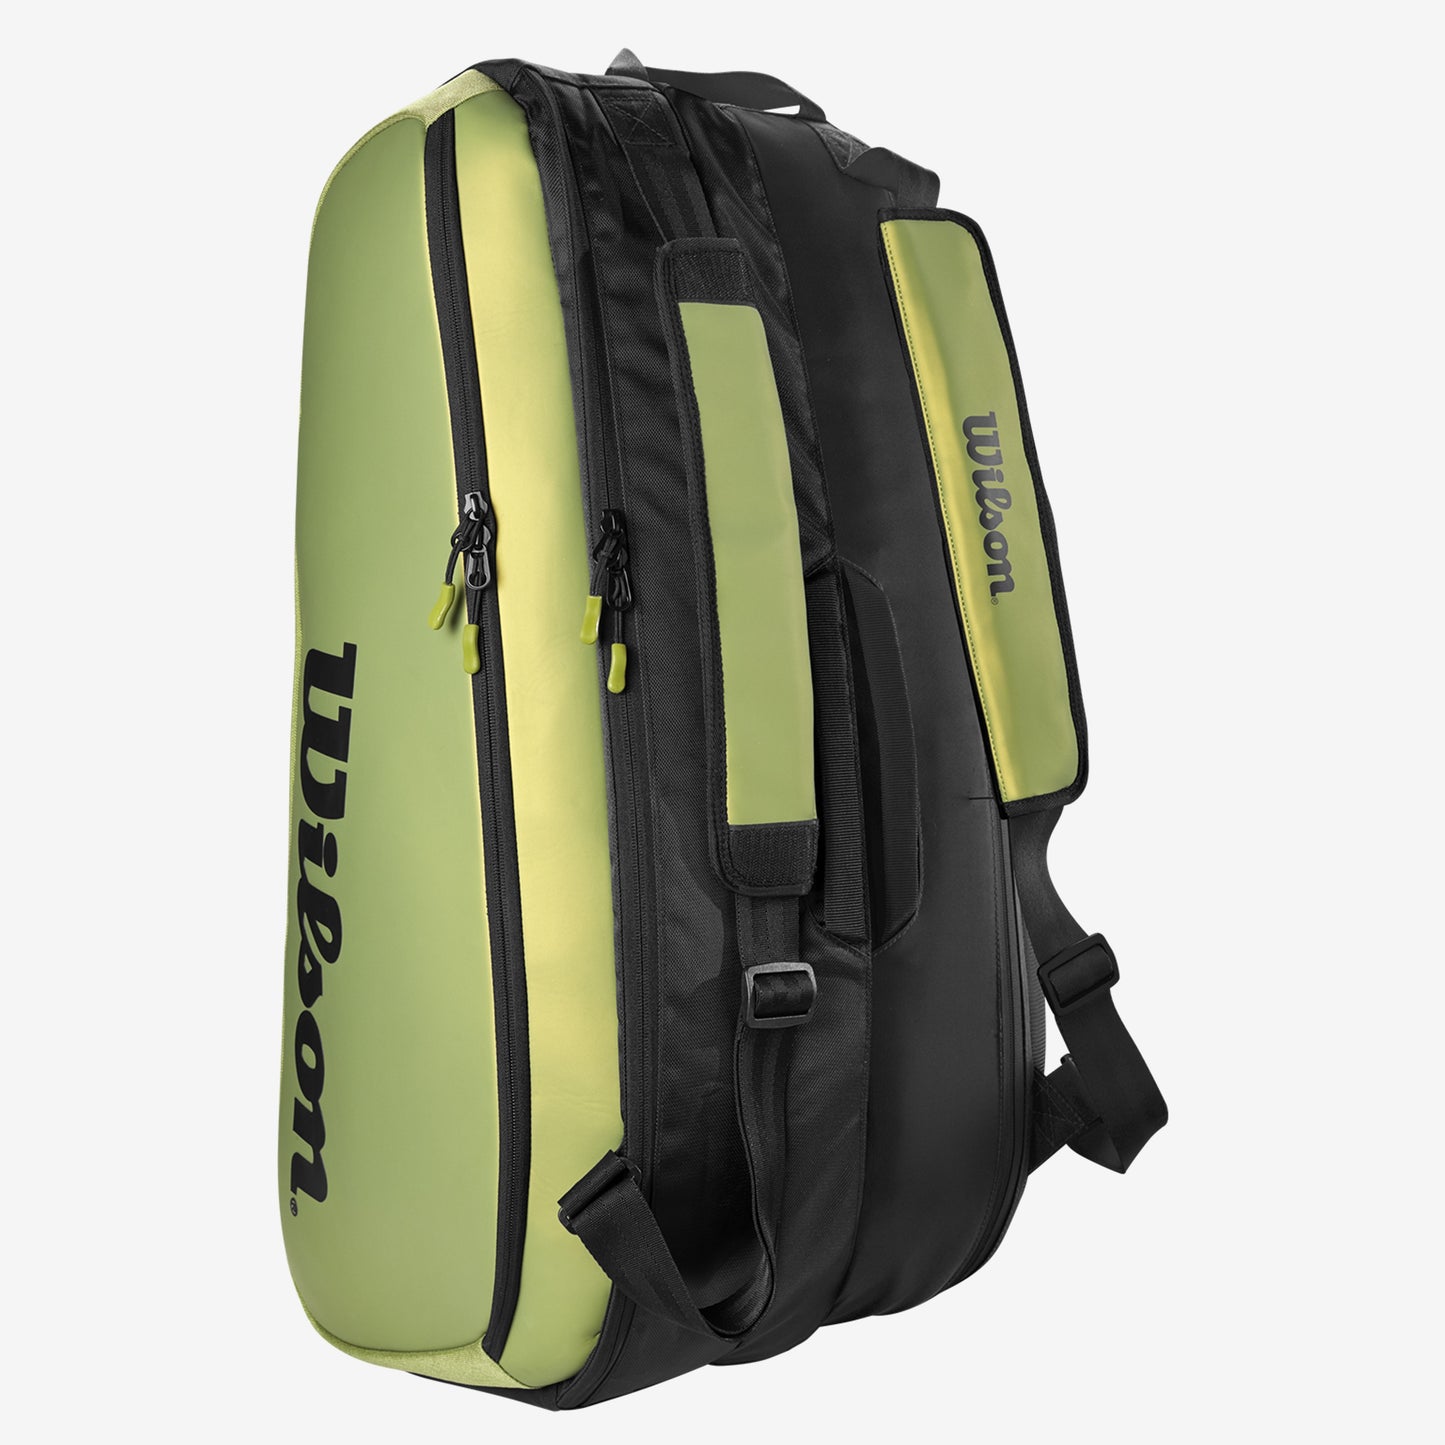 Wilson Super Tour Blade v8 9-pack tennis bag